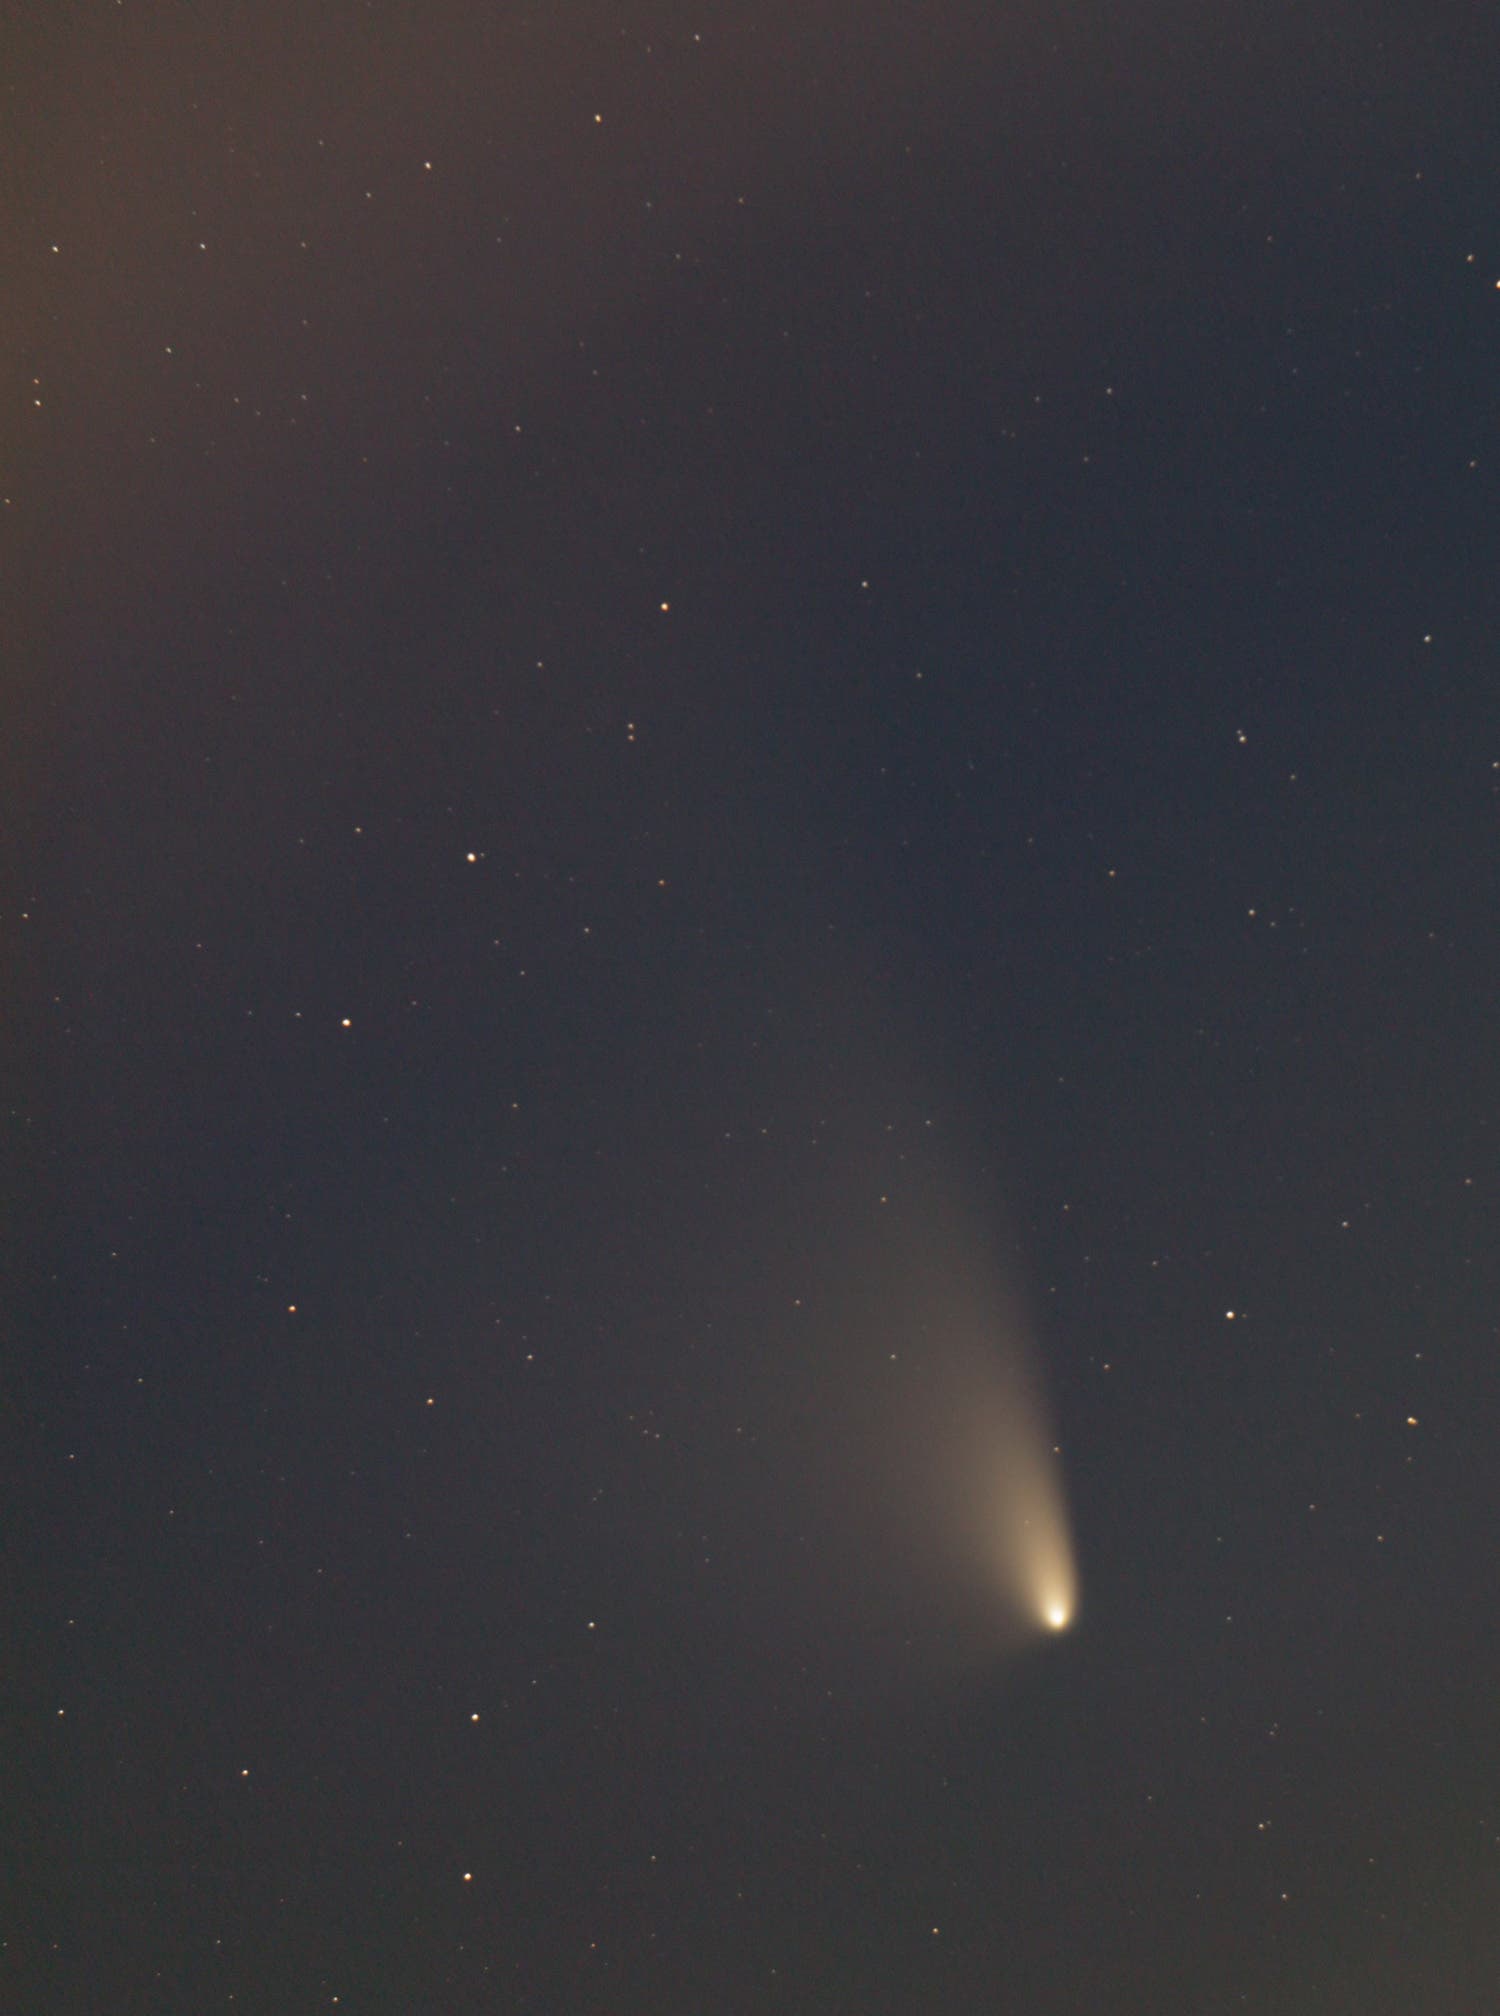 Komet PANSTARRS bei Vollmond